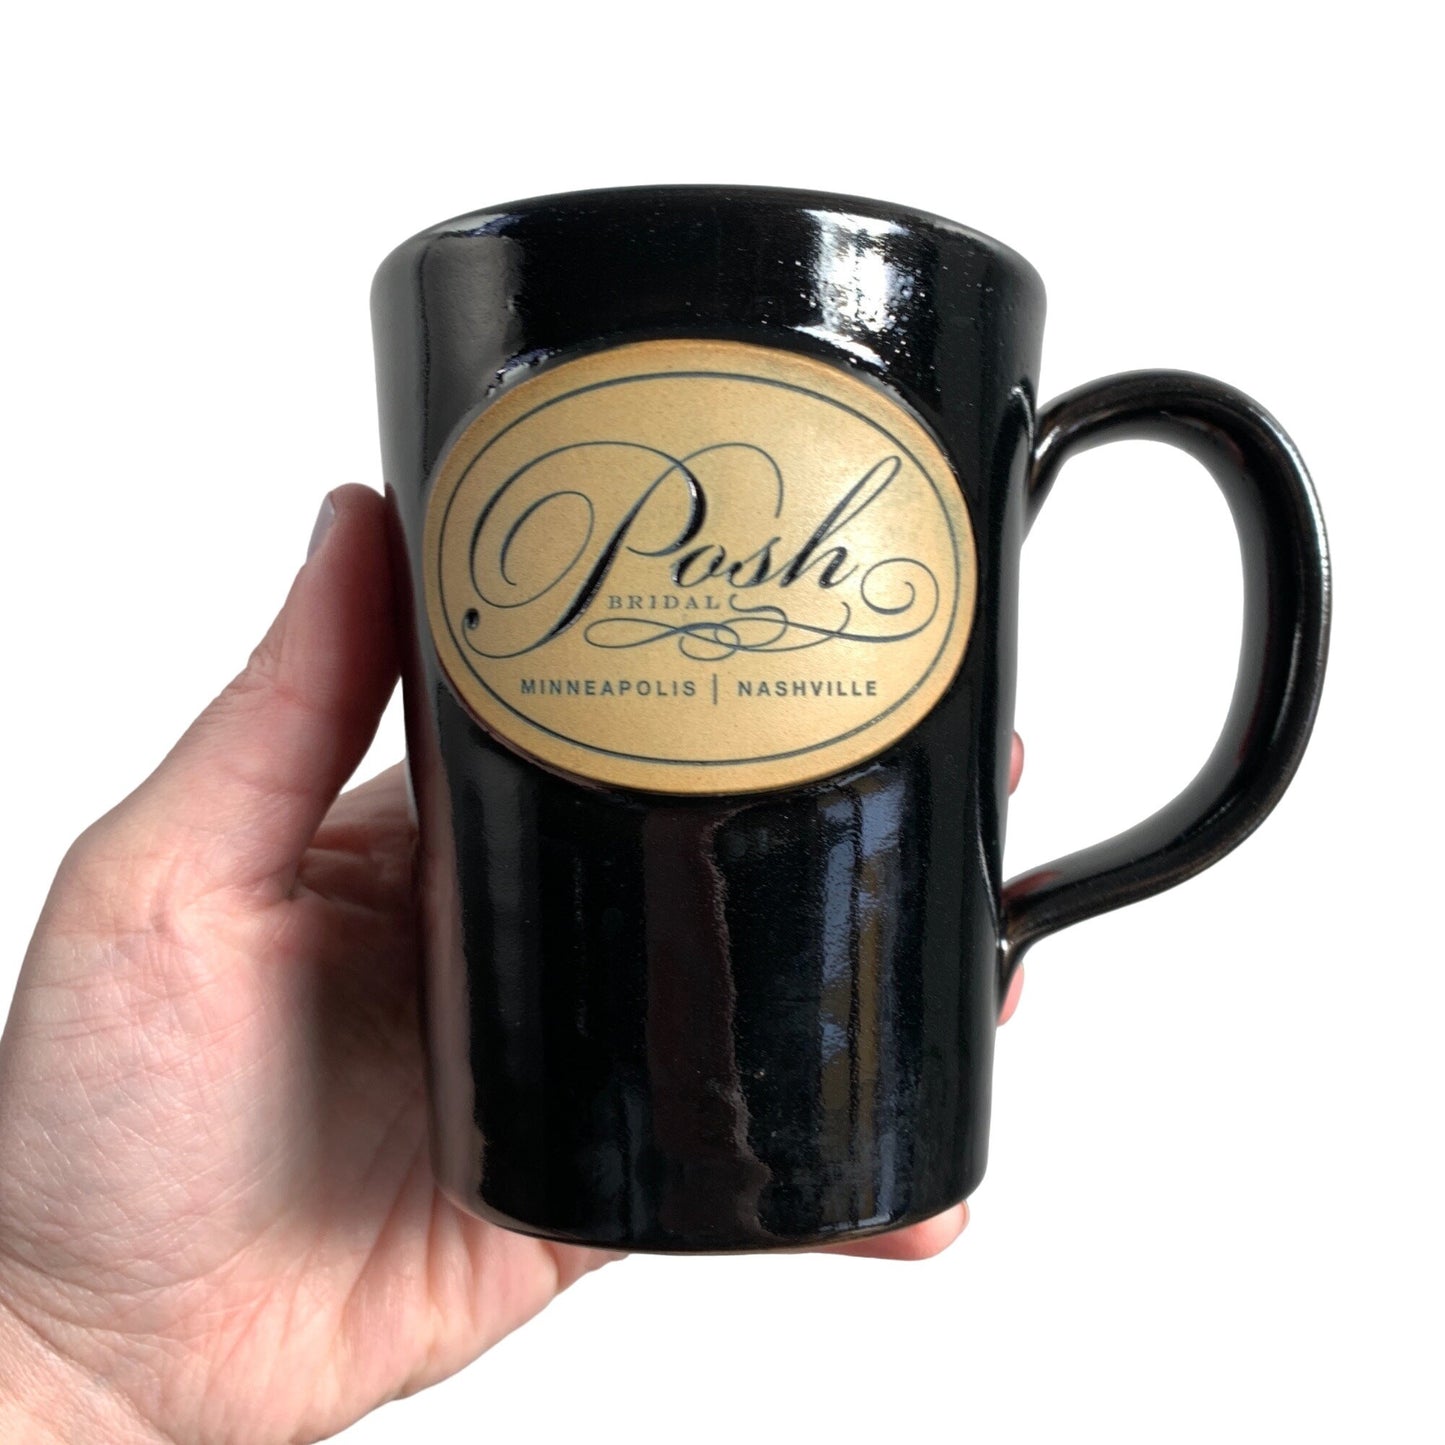 Deneen Pottery Posh Bridal 2016 Minneapolis Nashville Black Coffee Mug